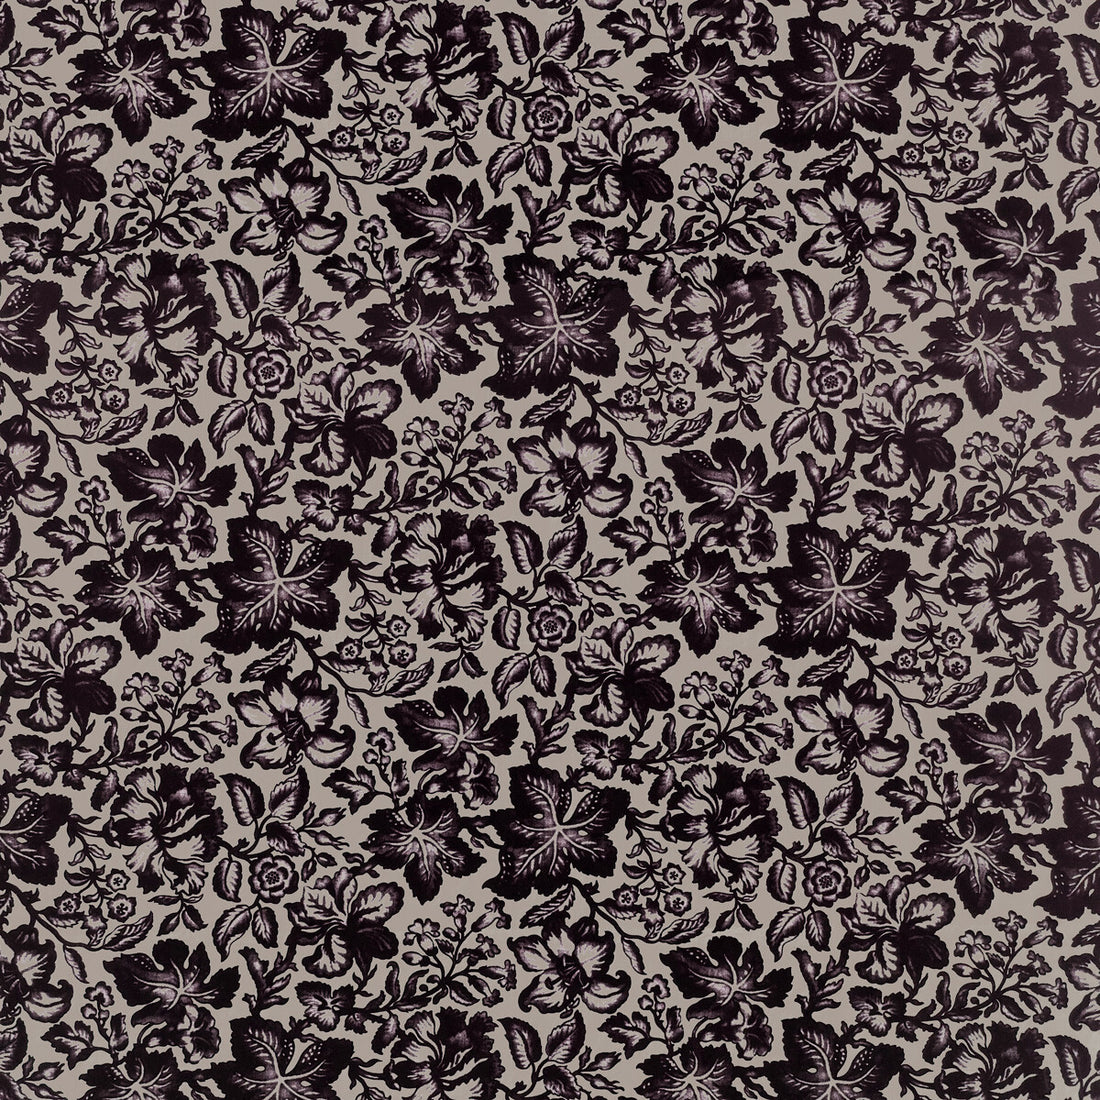 Susana fabric in berenjena color - pattern LCT1044.004.0 - by Gaston y Daniela in the Lorenzo Castillo VI collection